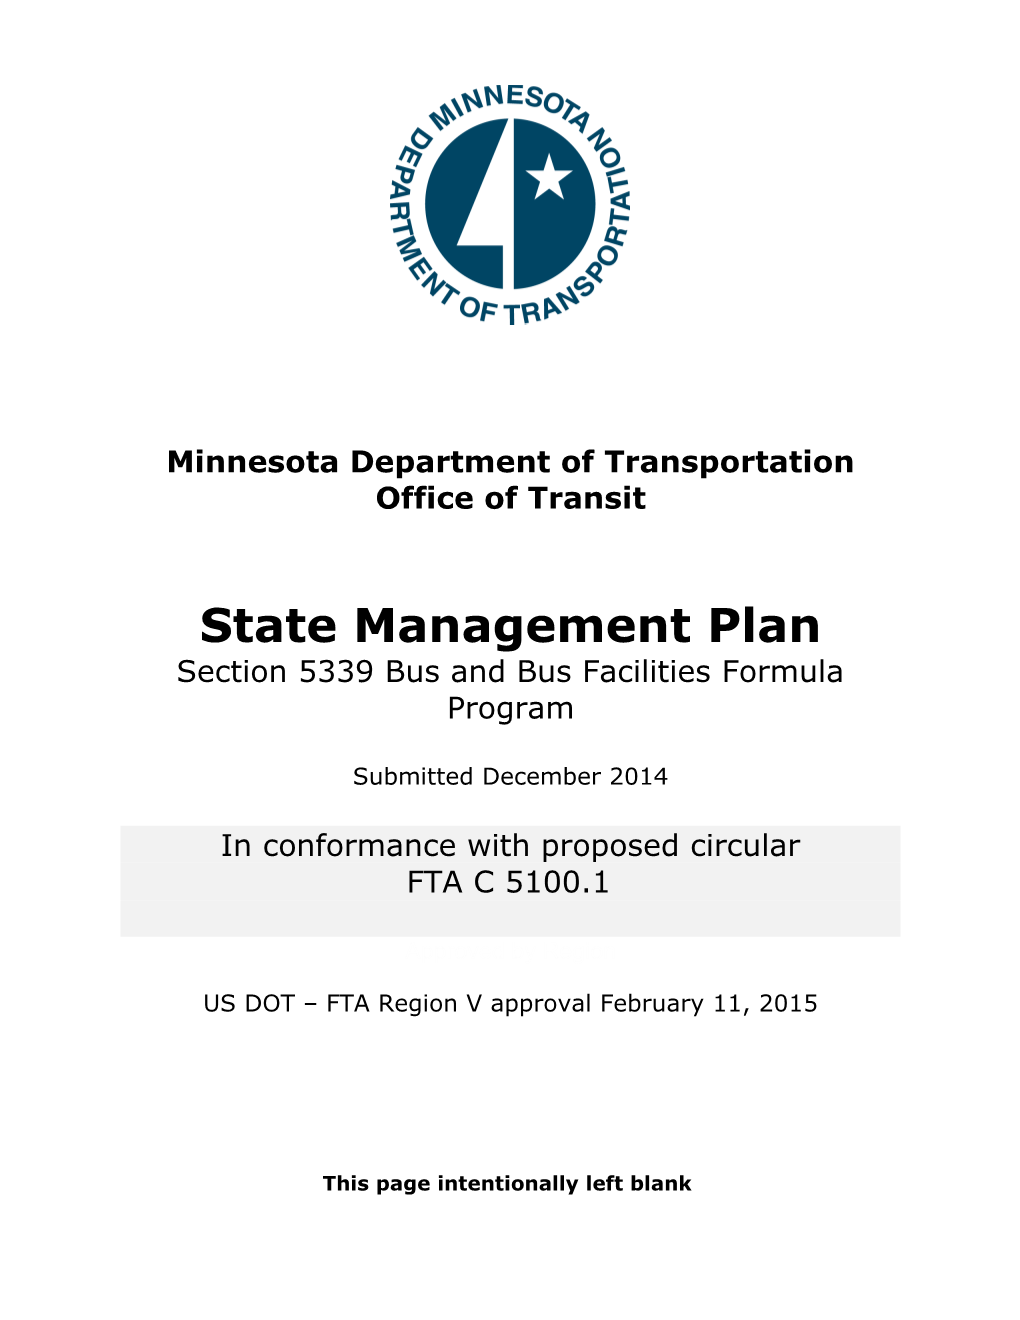 State Management Plan